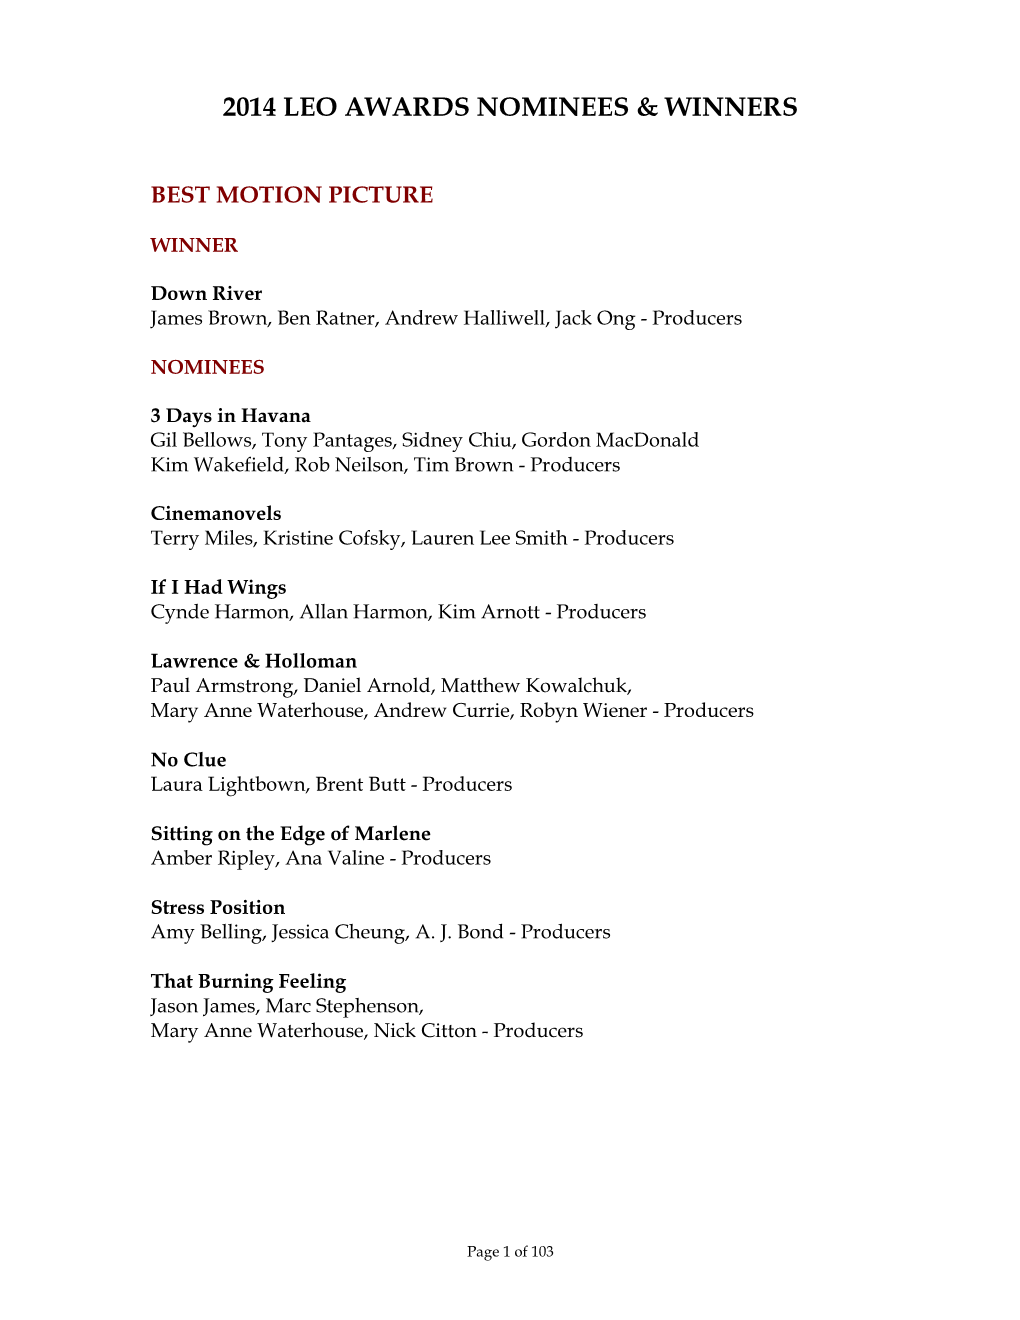 2014 Leo Awards Nominees & Winners